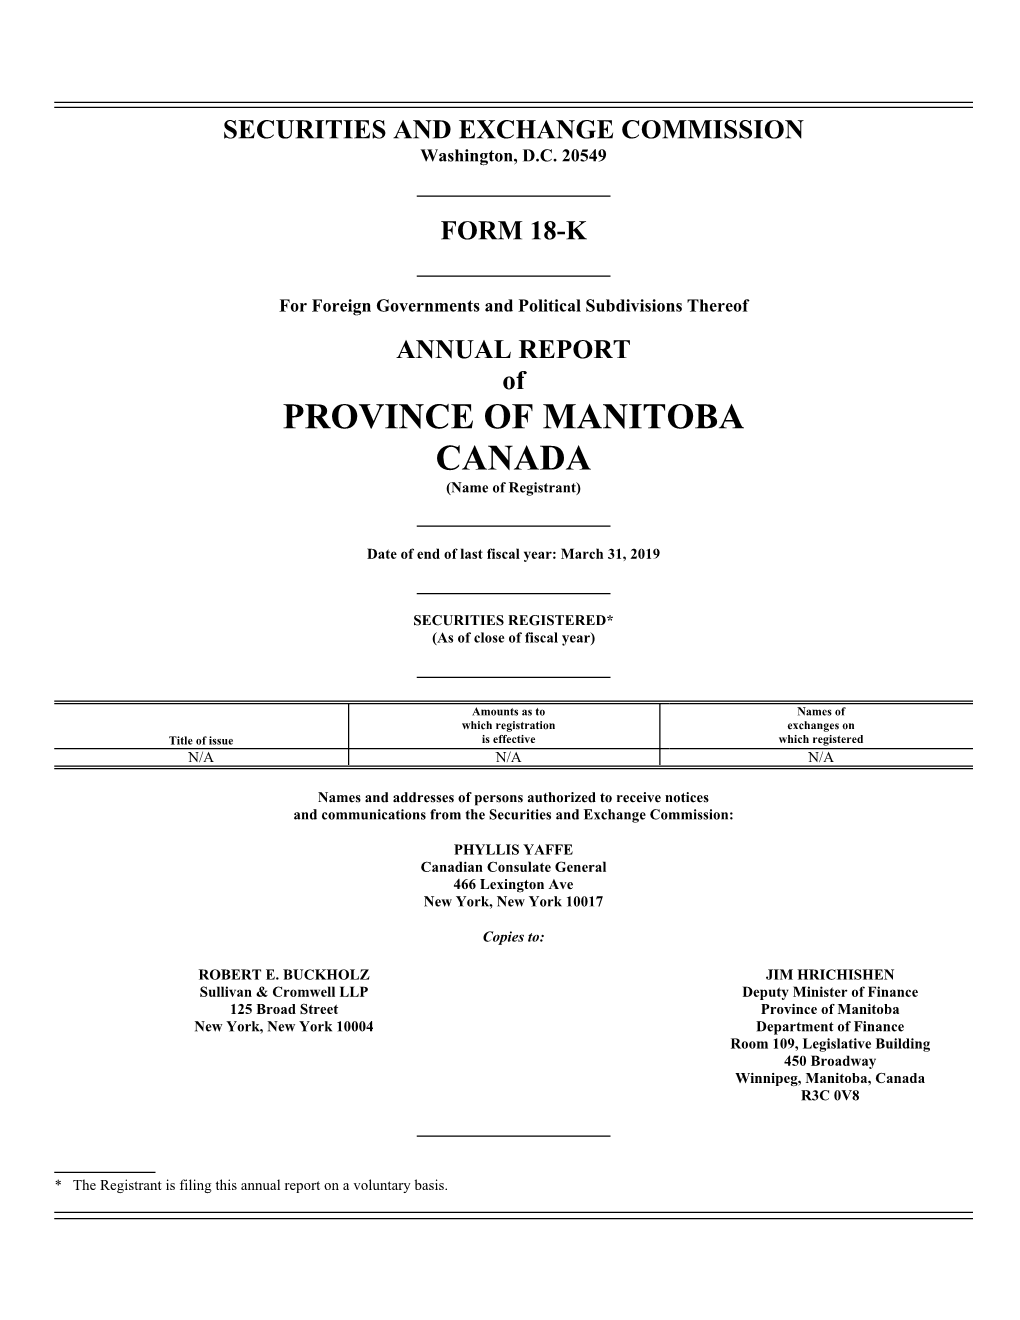 PROVINCE of MANITOBA CANADA (Name of Registrant)